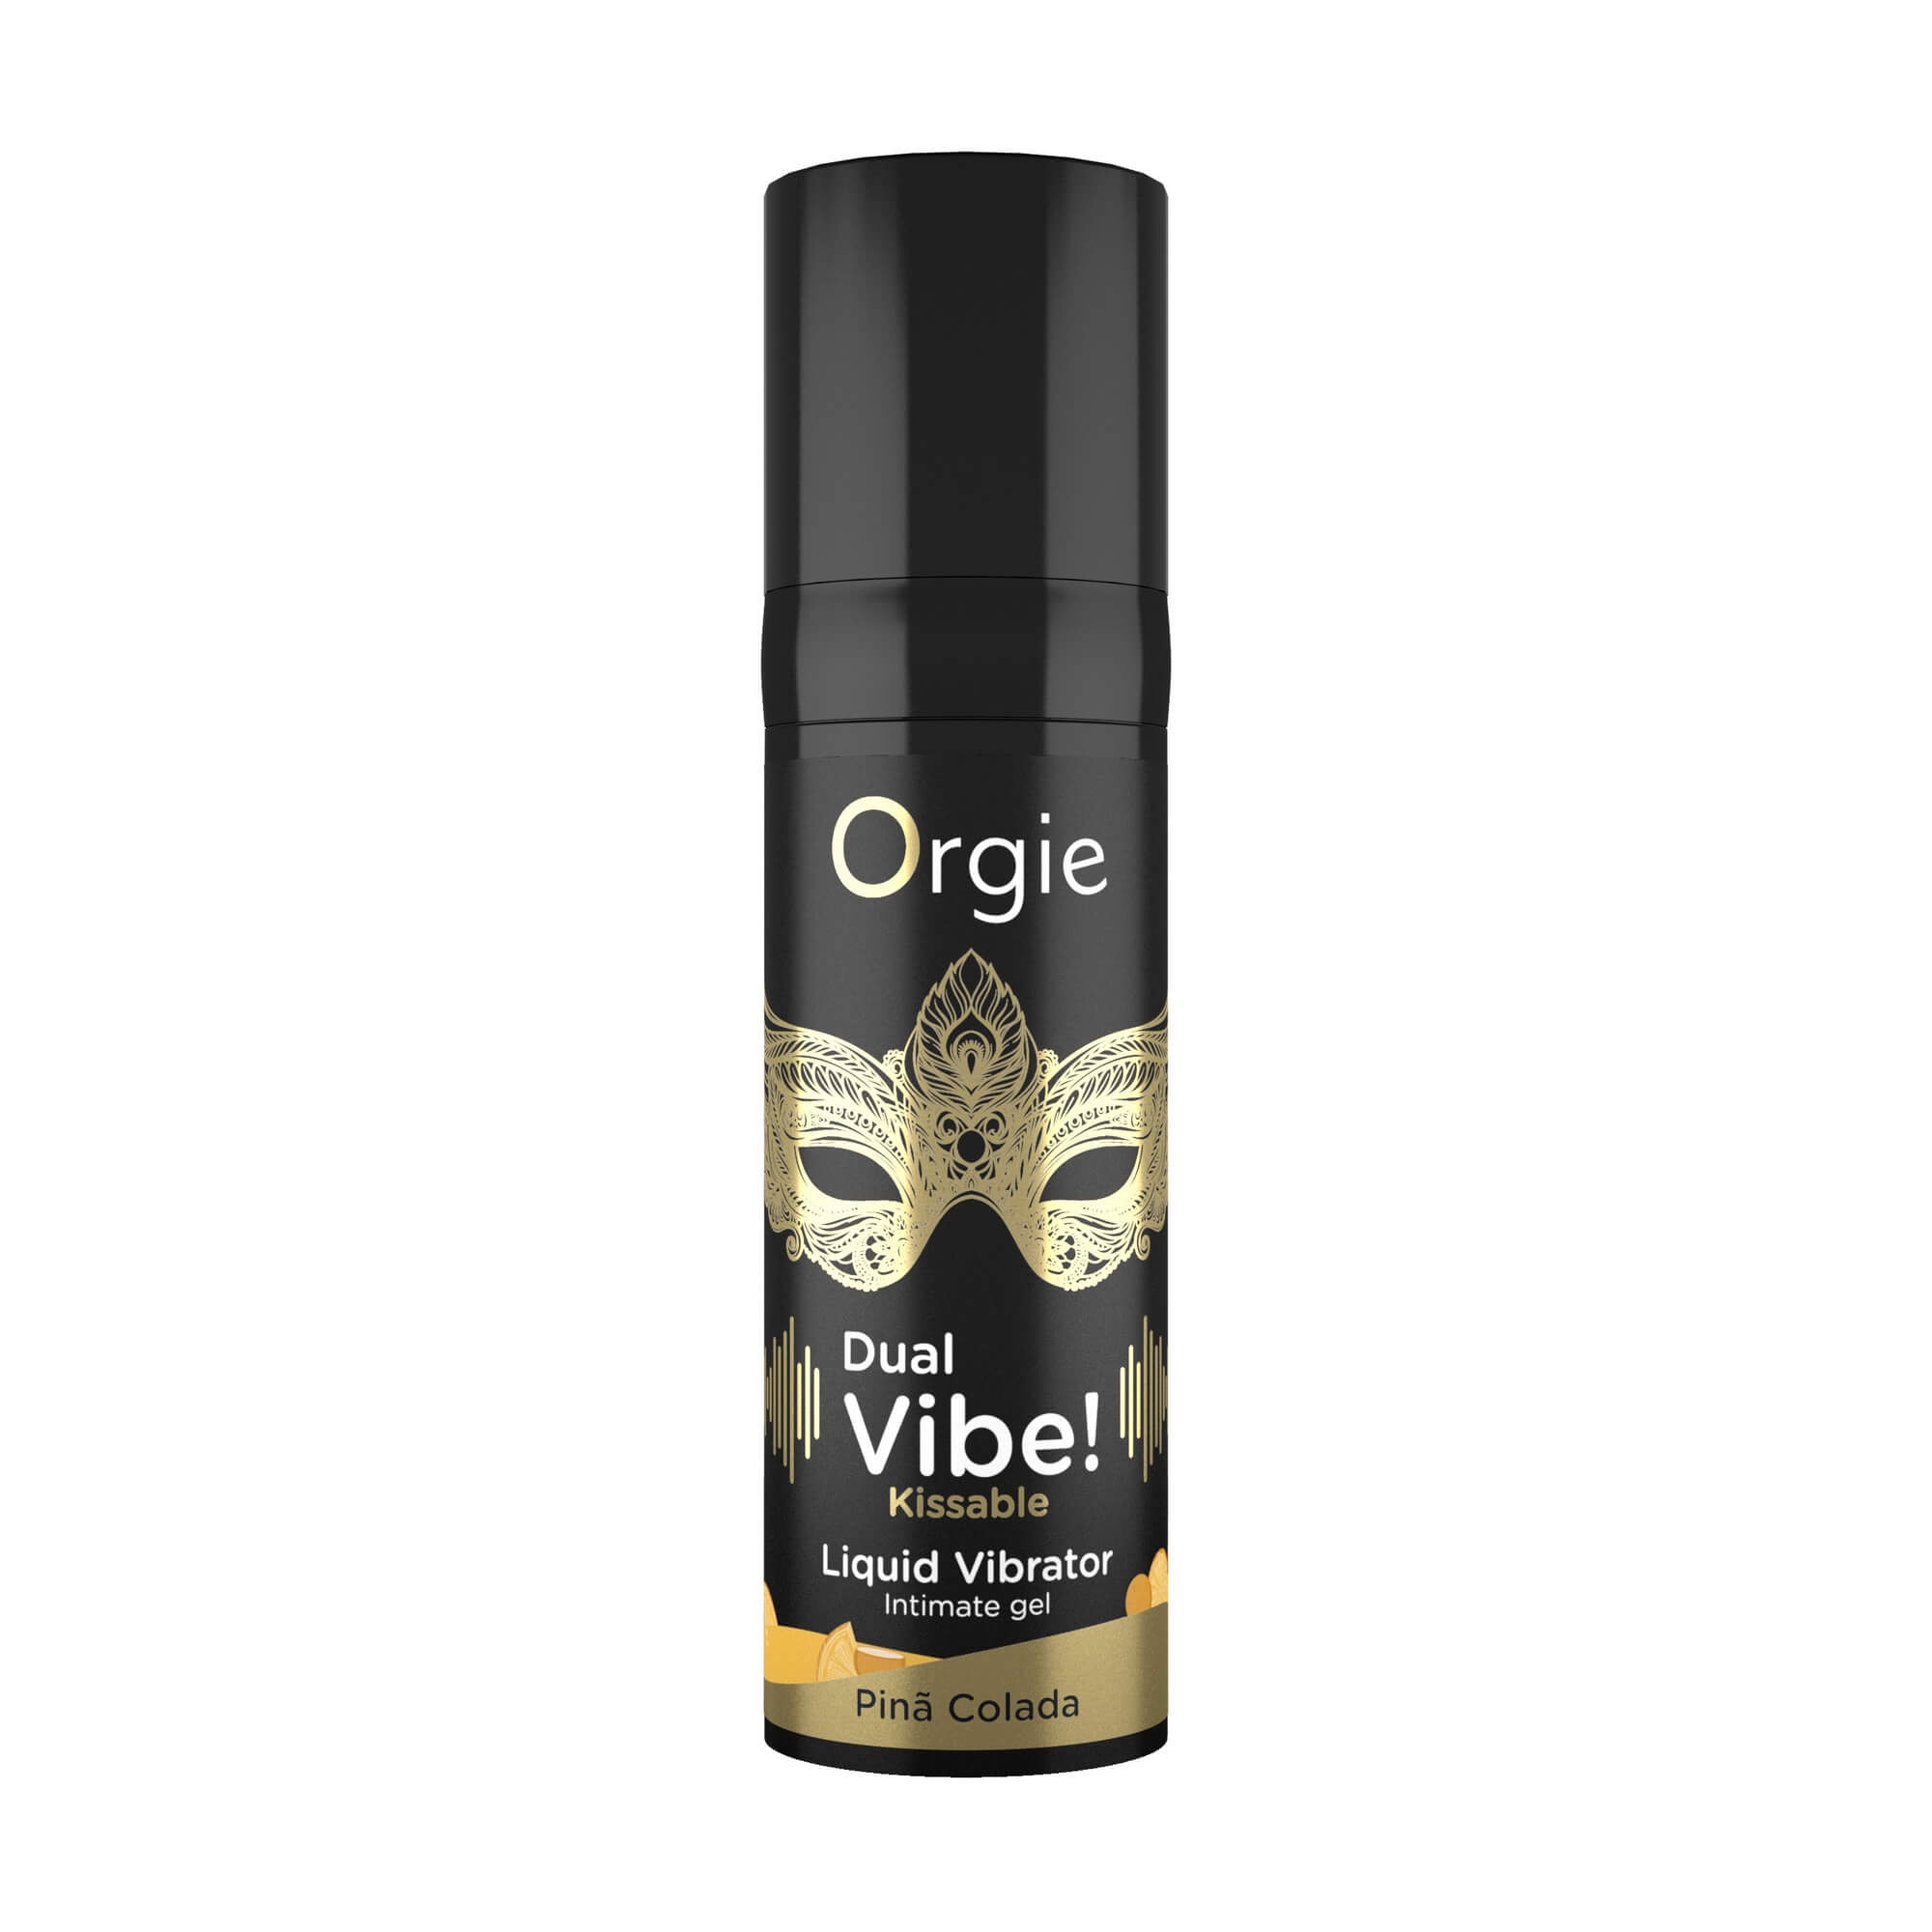 Orgie Dual Vibe! - folyékony vibrátor - Pinã Colada (15 ml) Parfüm, kozmetikum kép